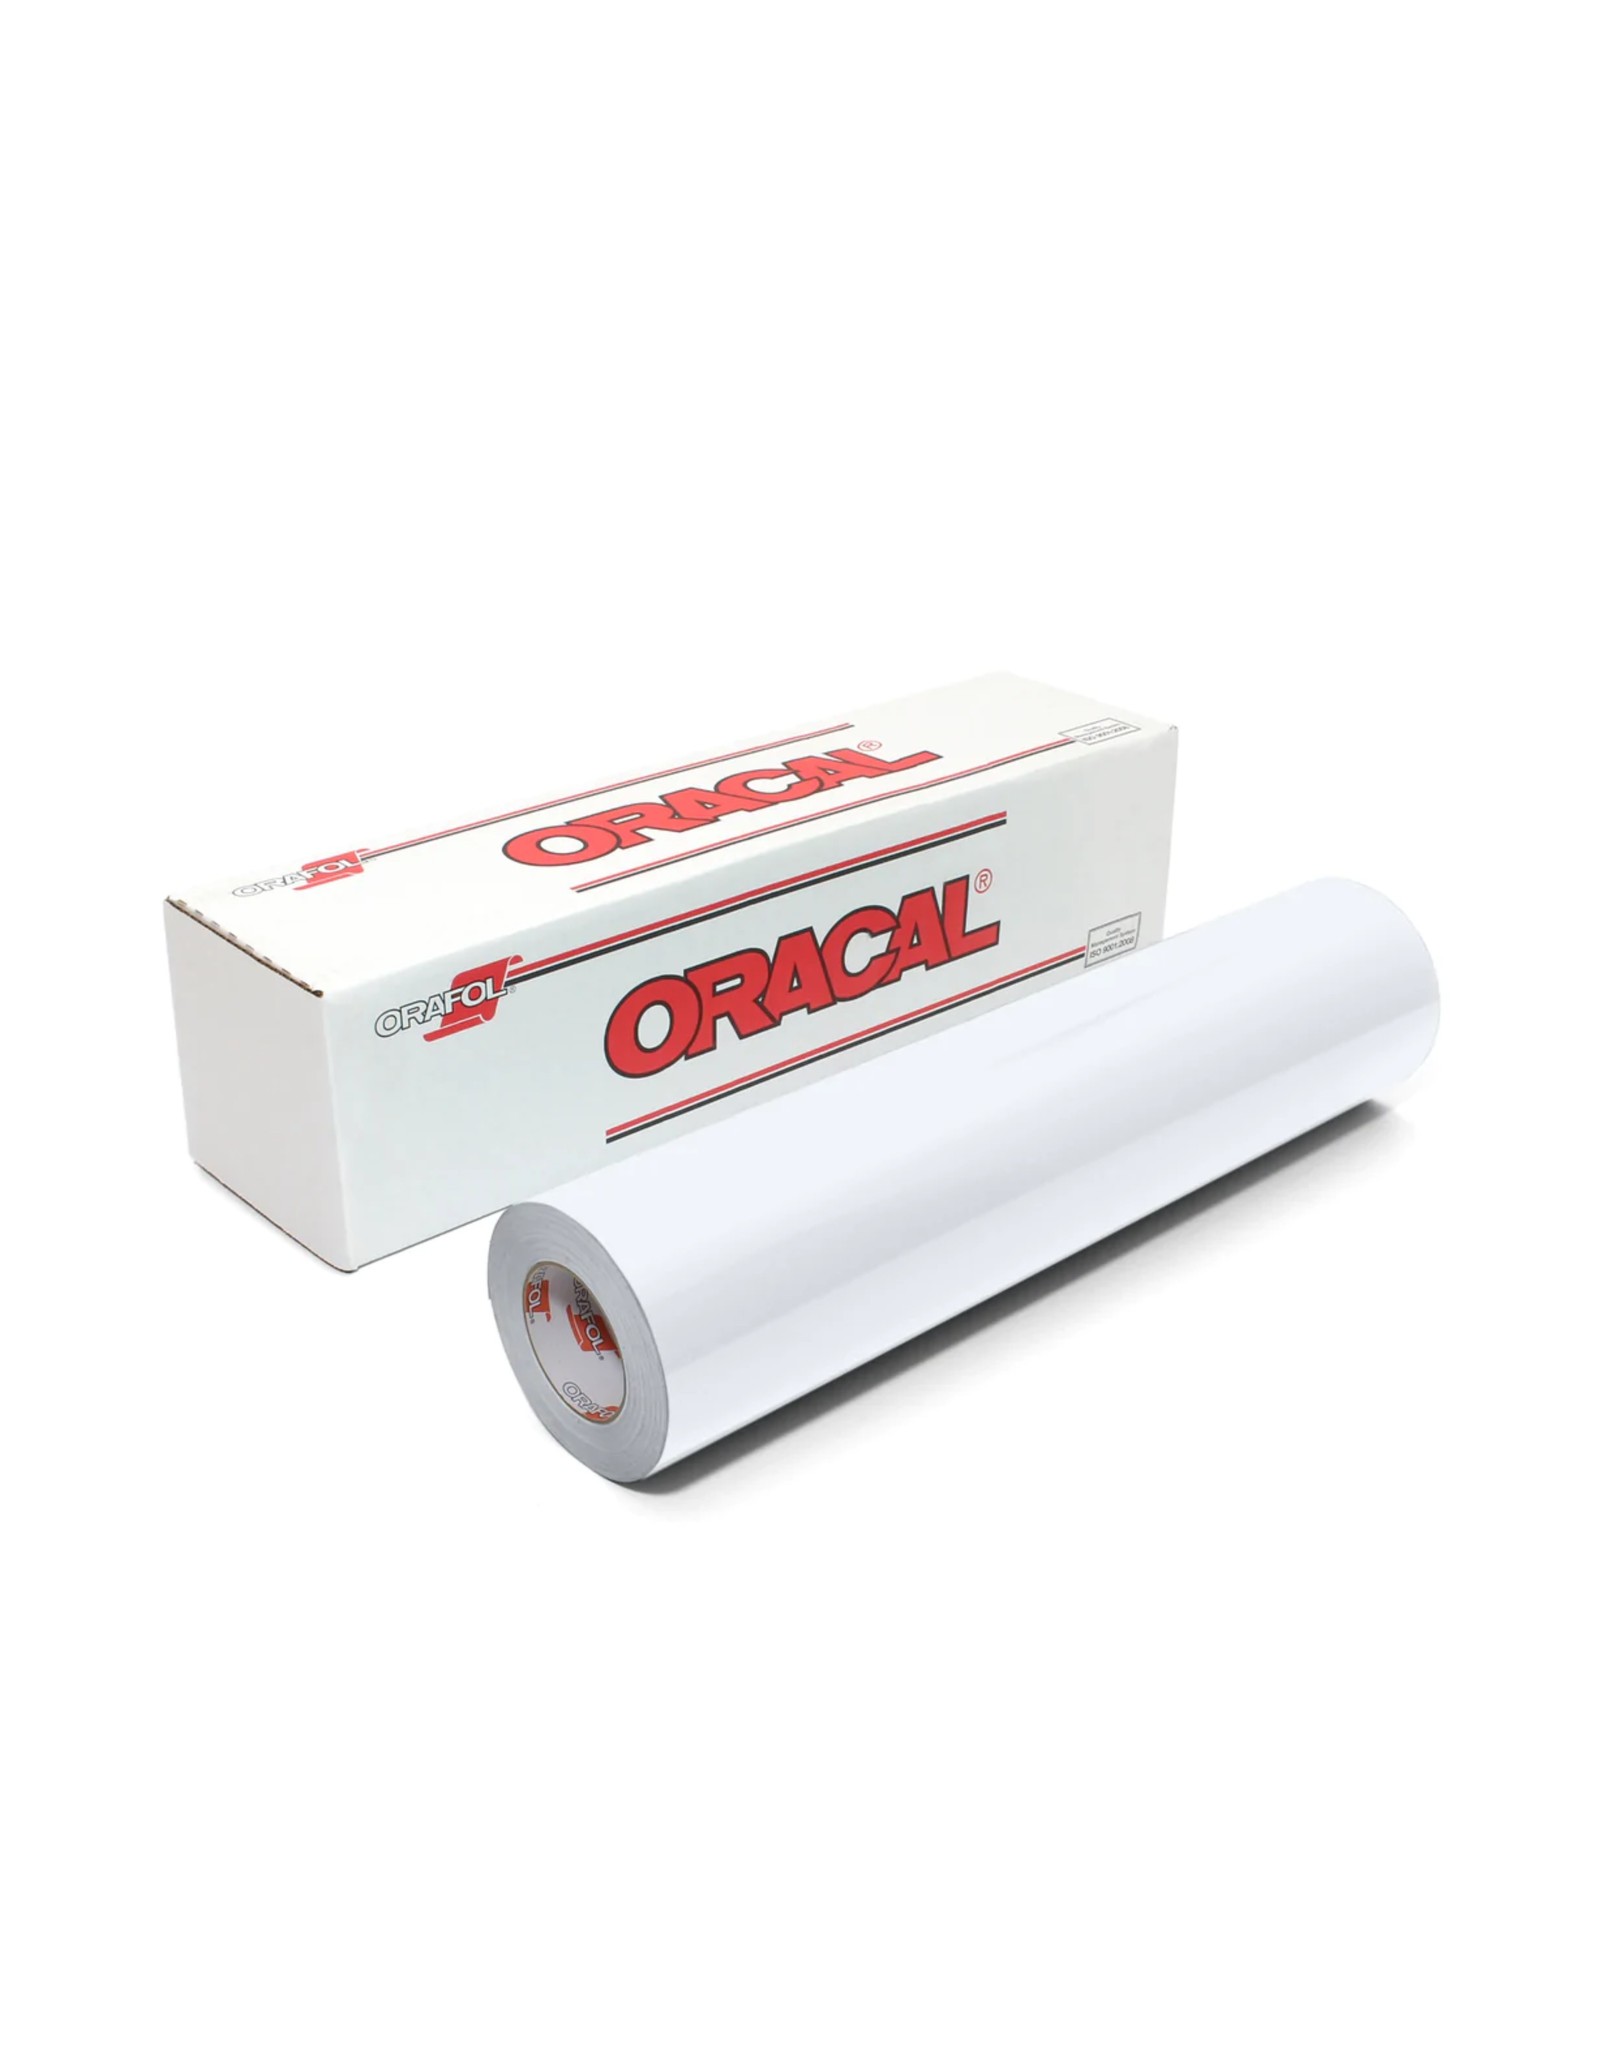 651 Oracal Roll (5yd/15ft)